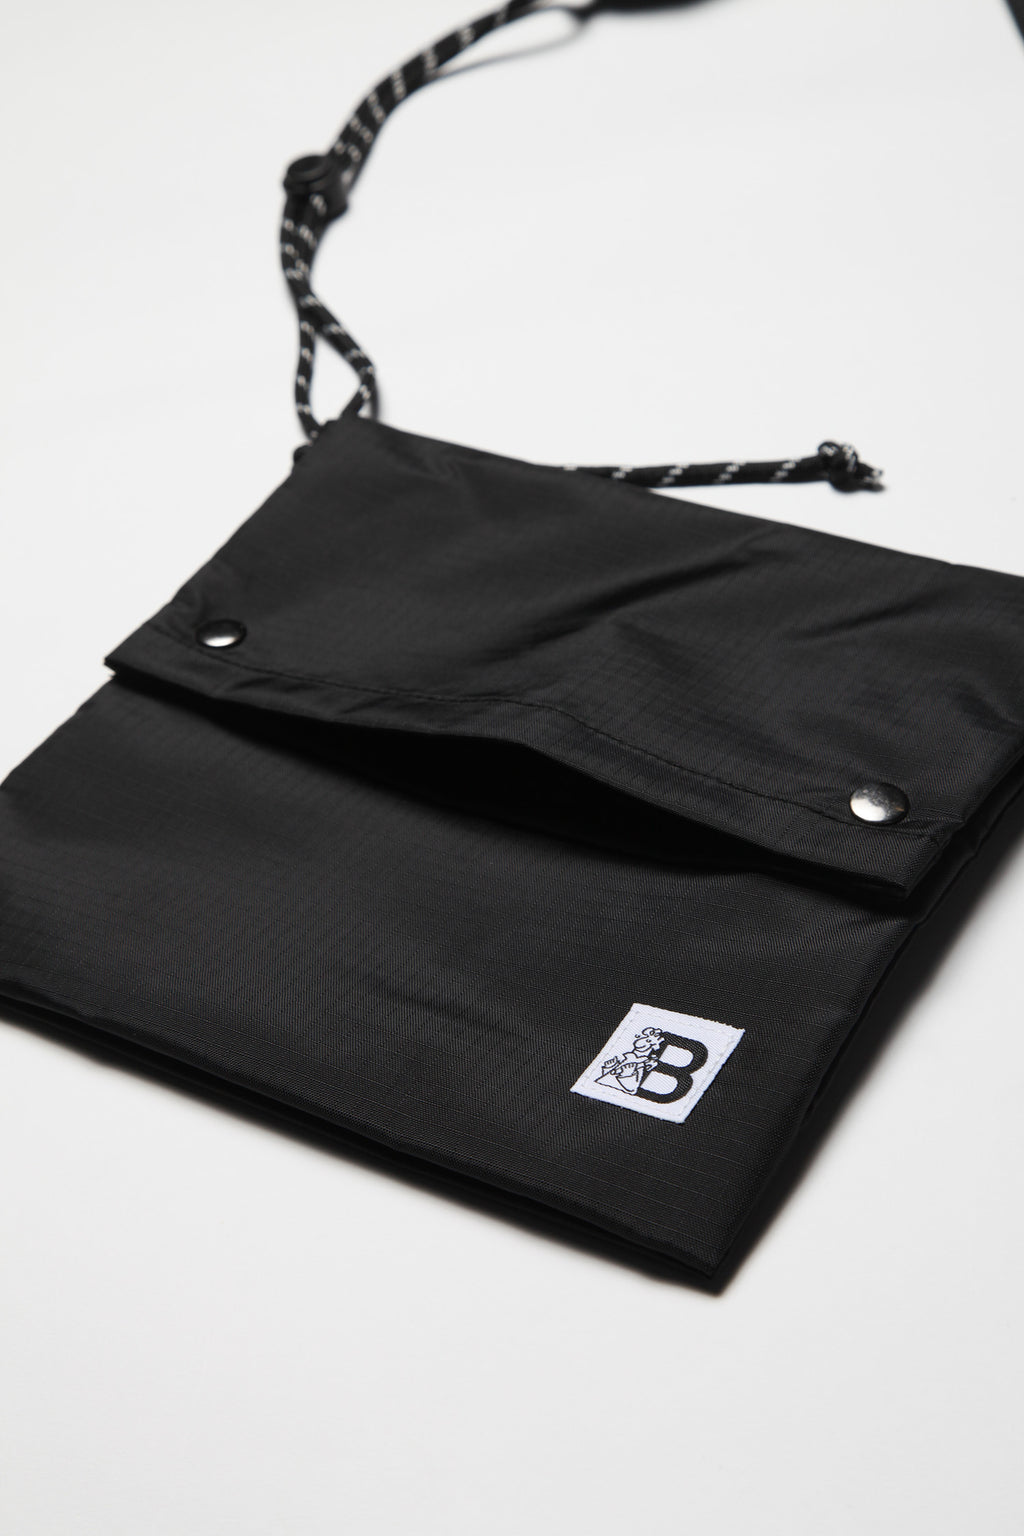 Blacksmith - Ripstop Sacoche Bag - Black